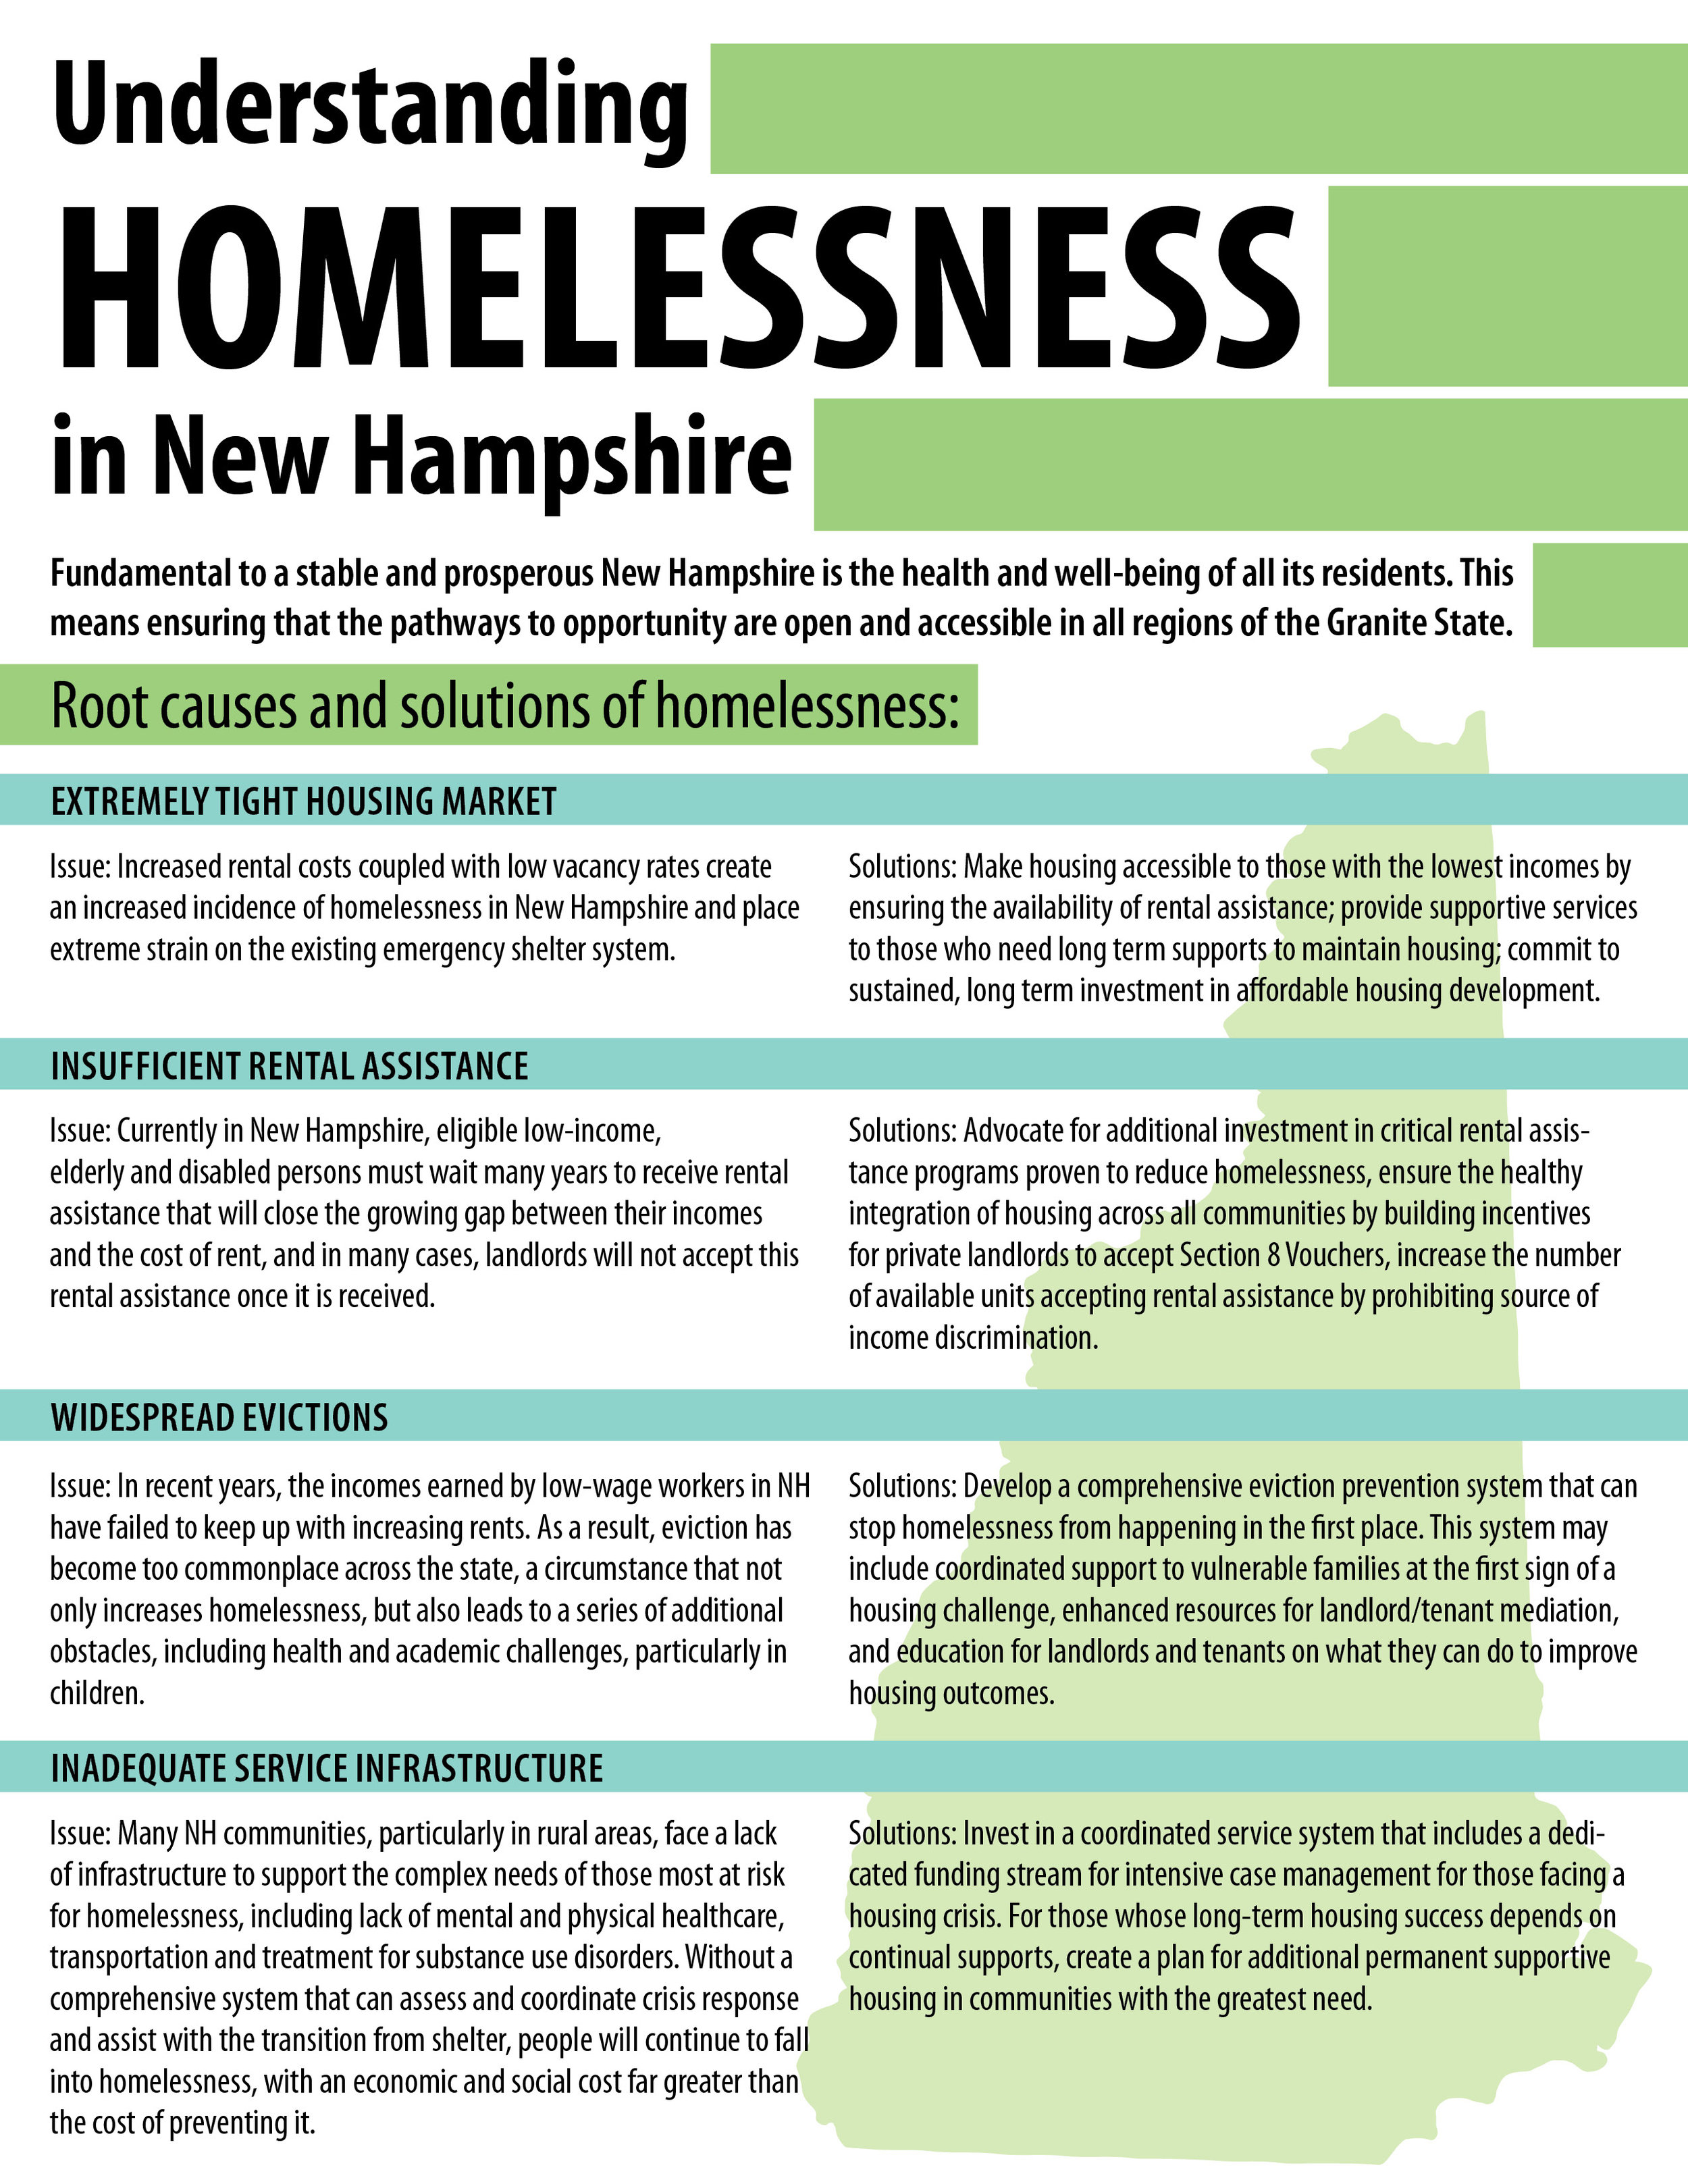 Understanding Homelessness (front)